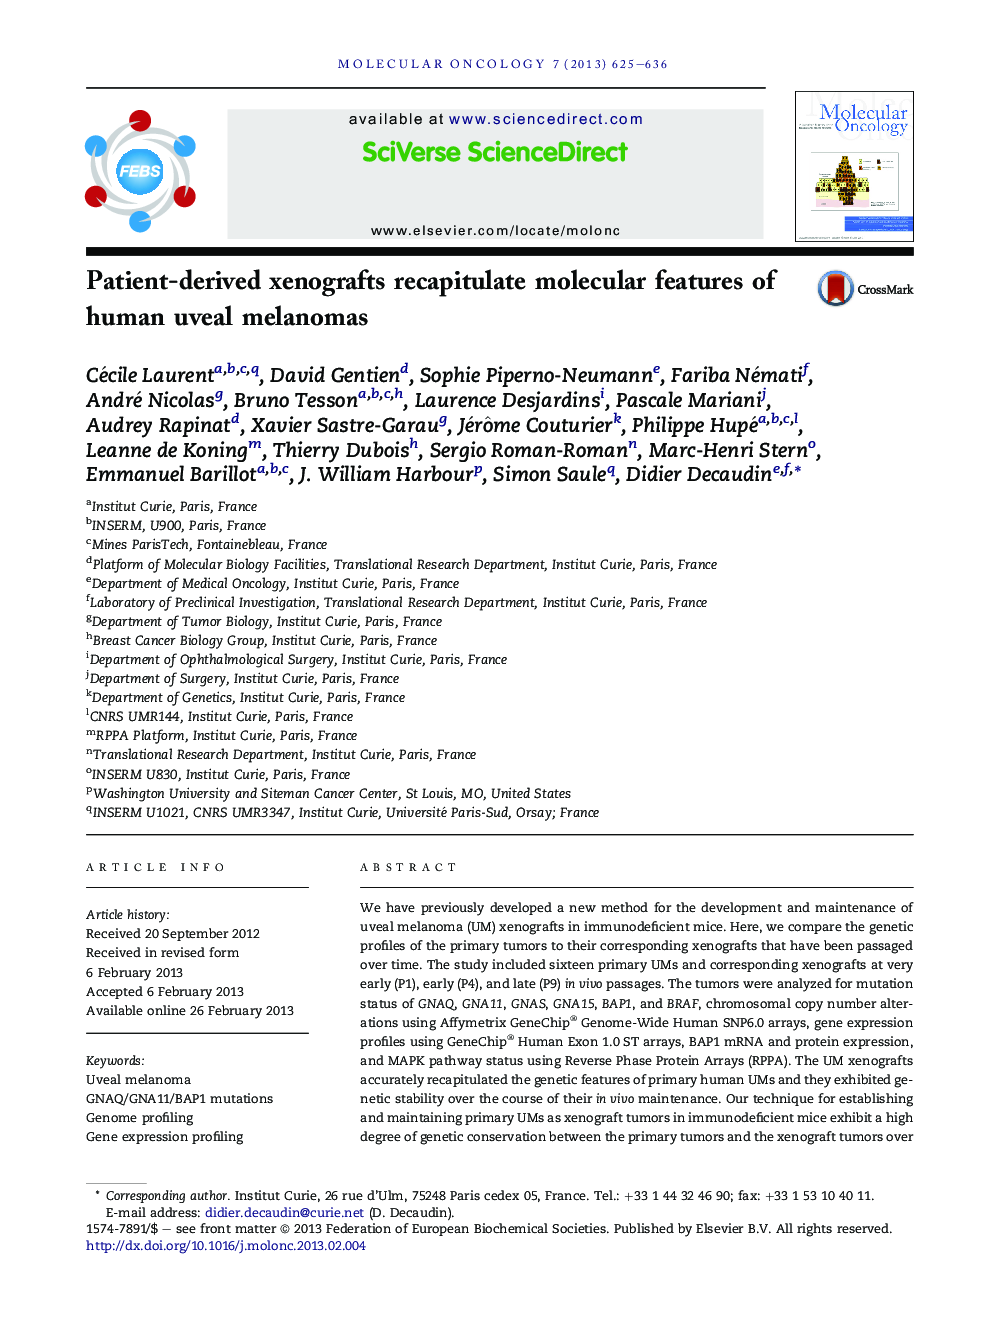 Patient-derived xenografts recapitulate molecular features of human uveal melanomas